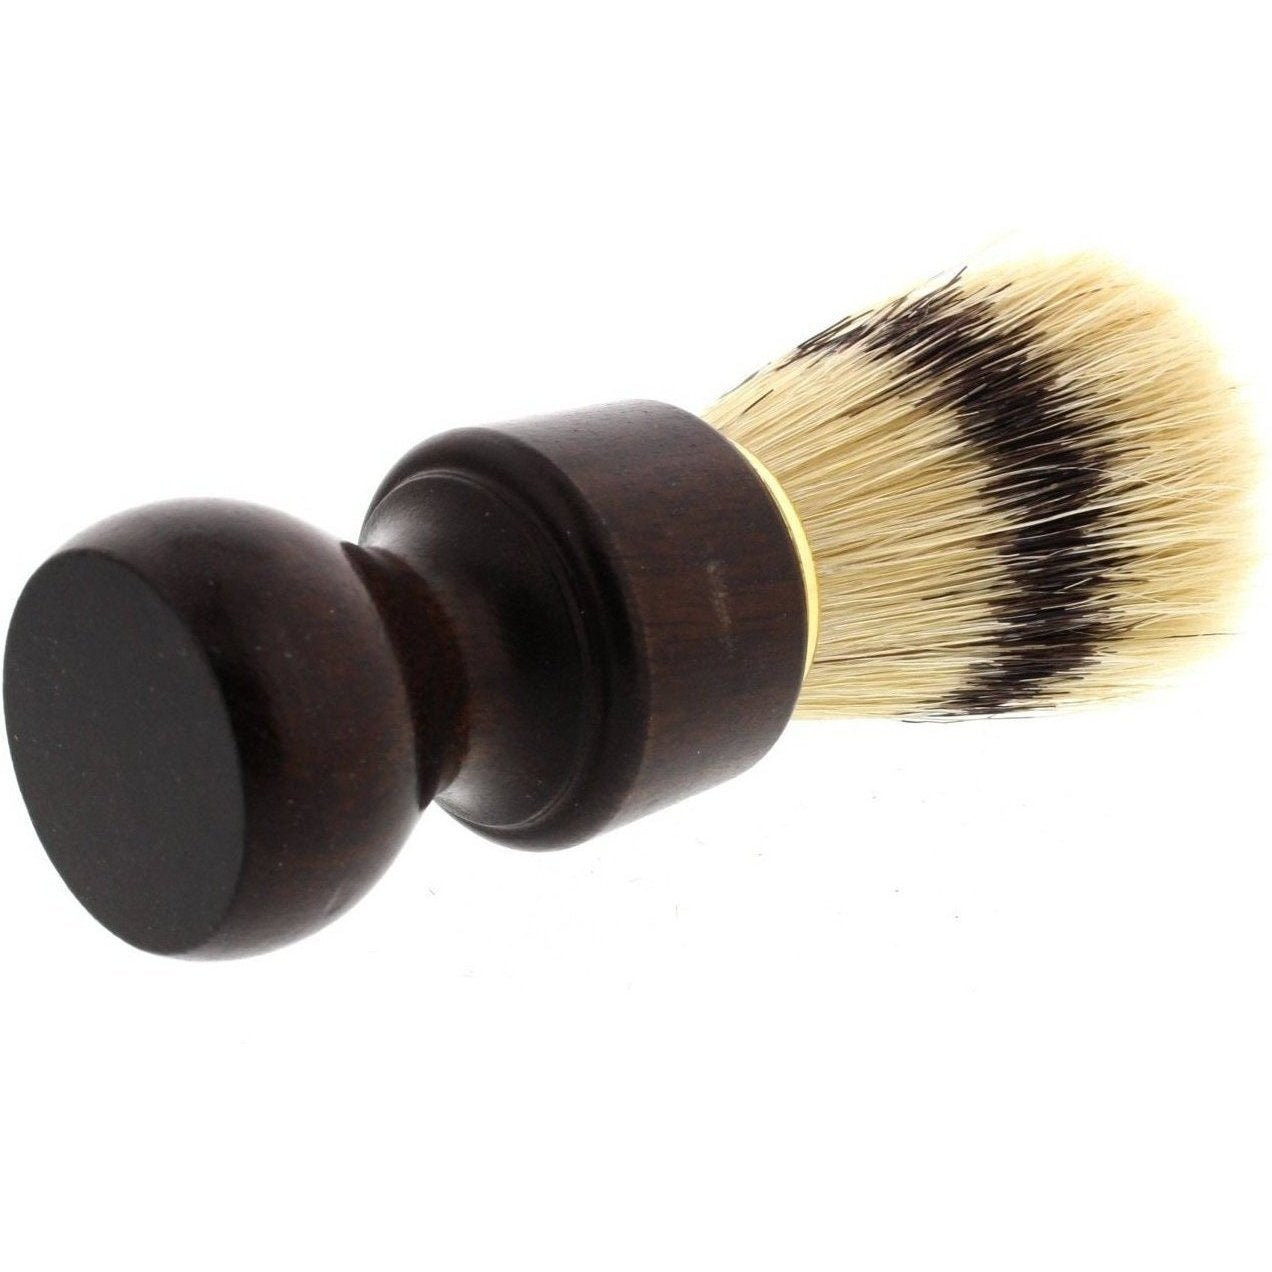 Product image 4 for Omega 11126 Boar Shaving Brush, Ovangkol Wooden Handle